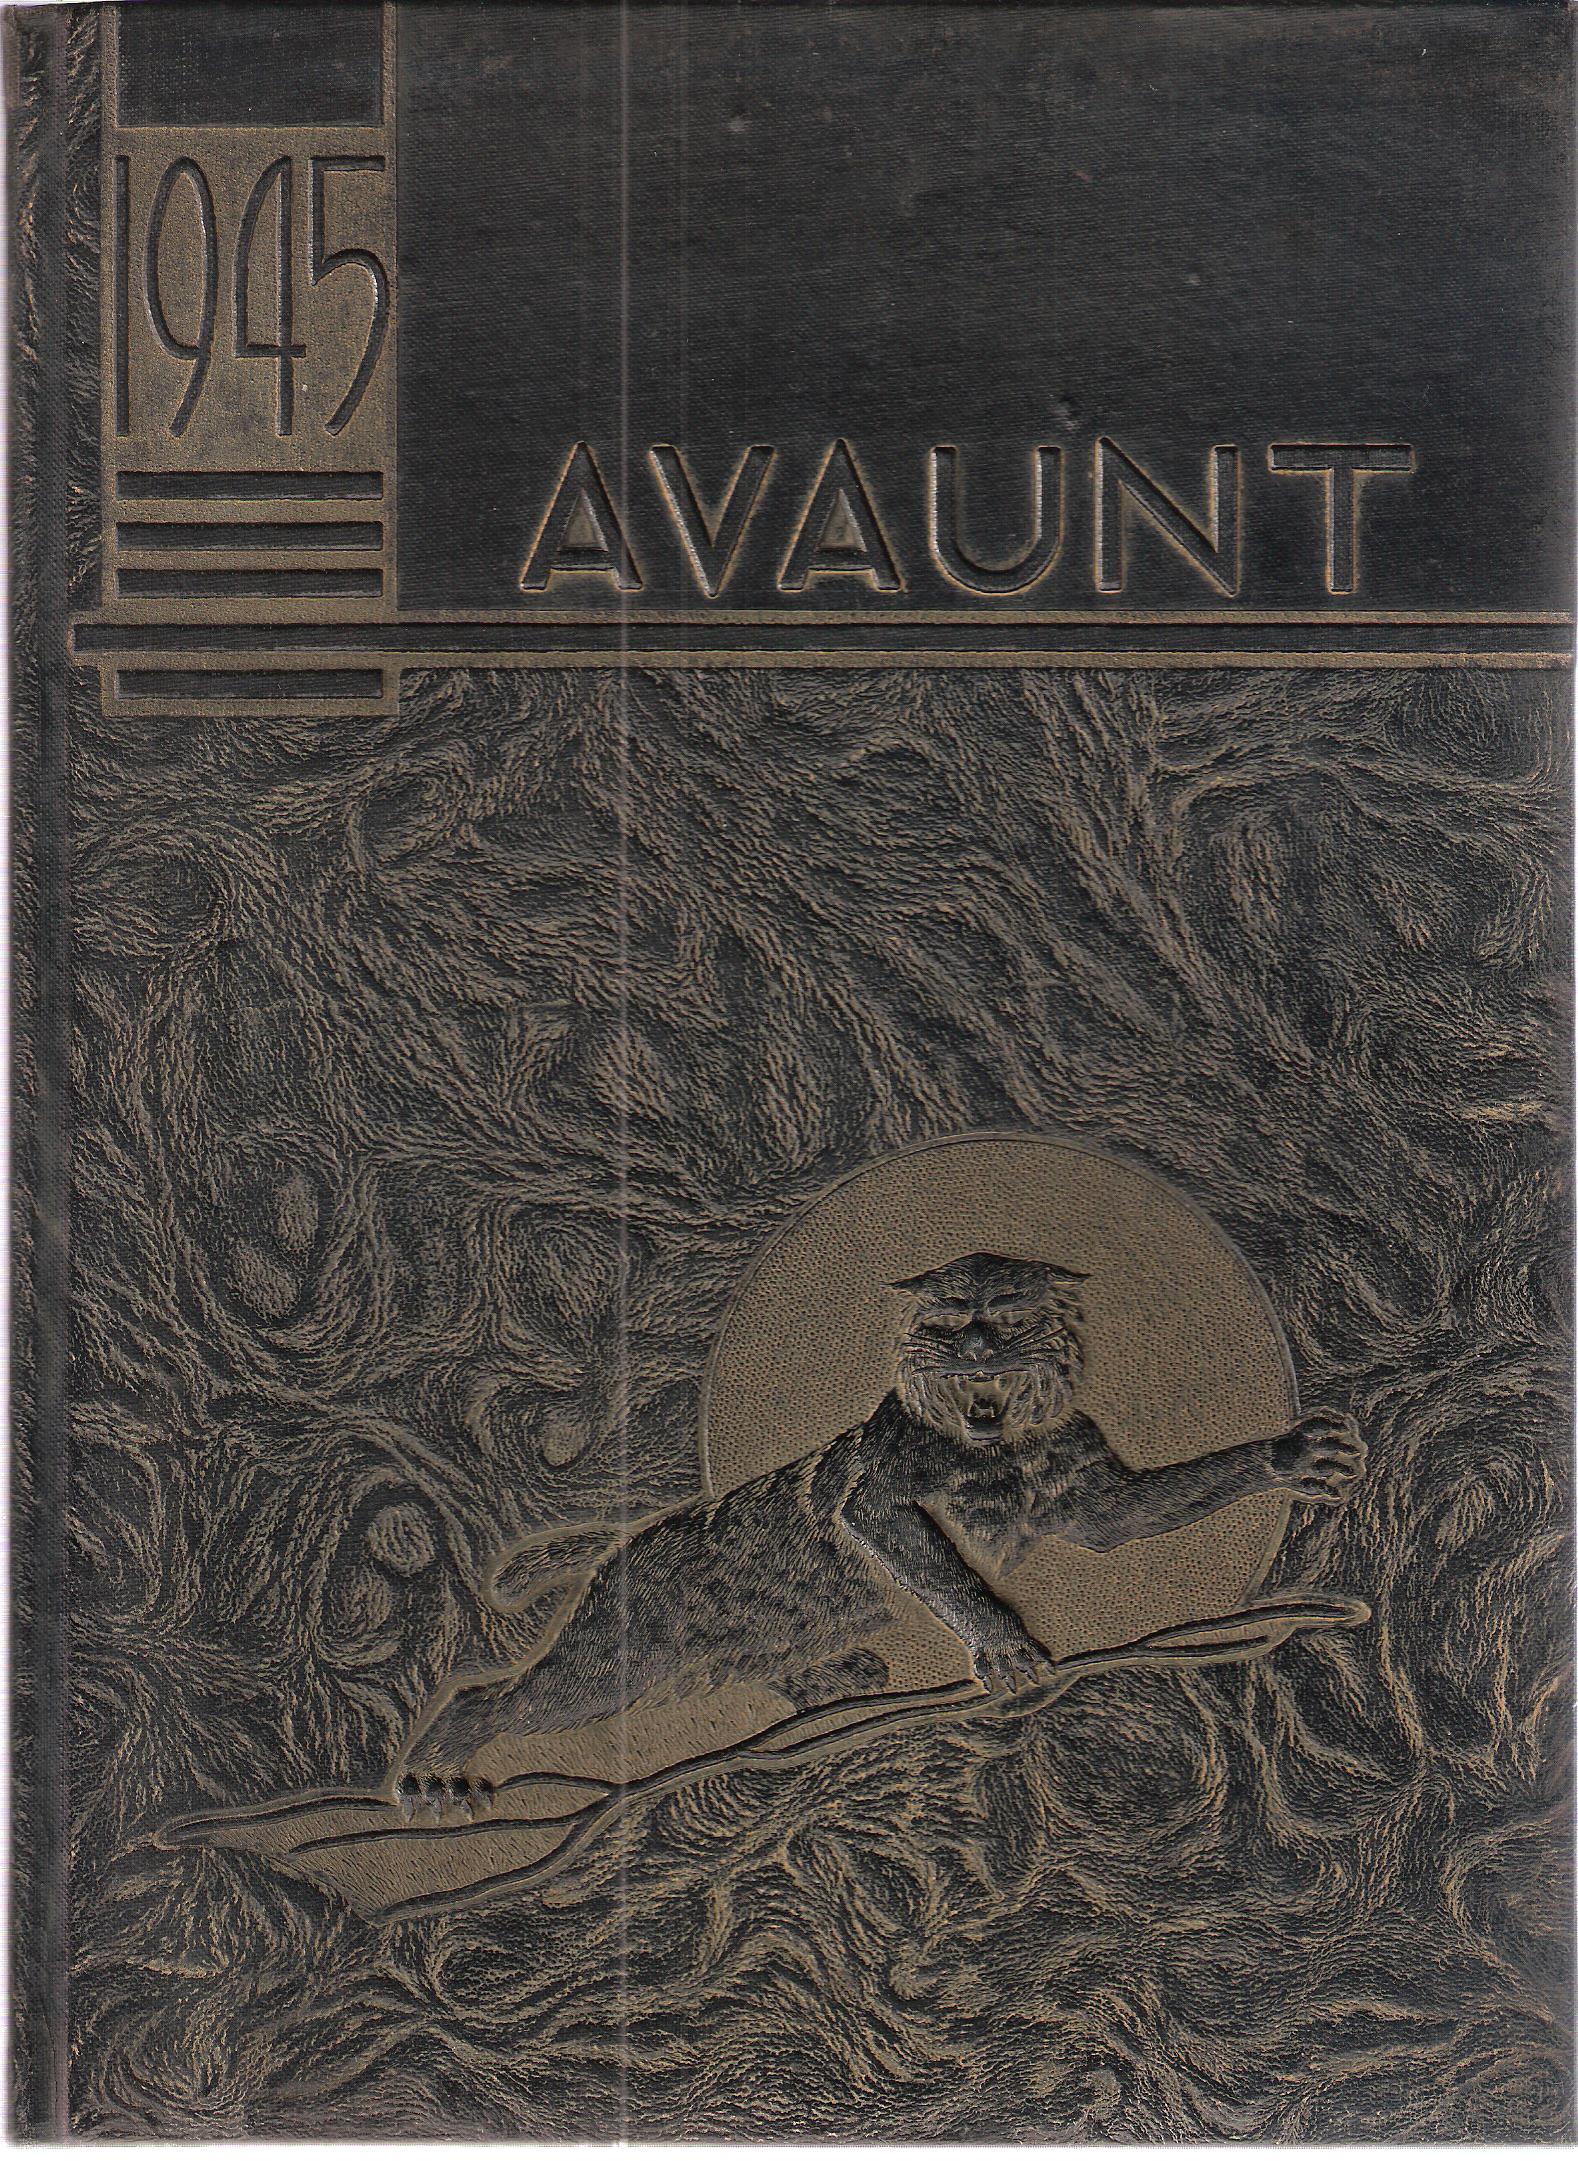 1945 Avaunt cover